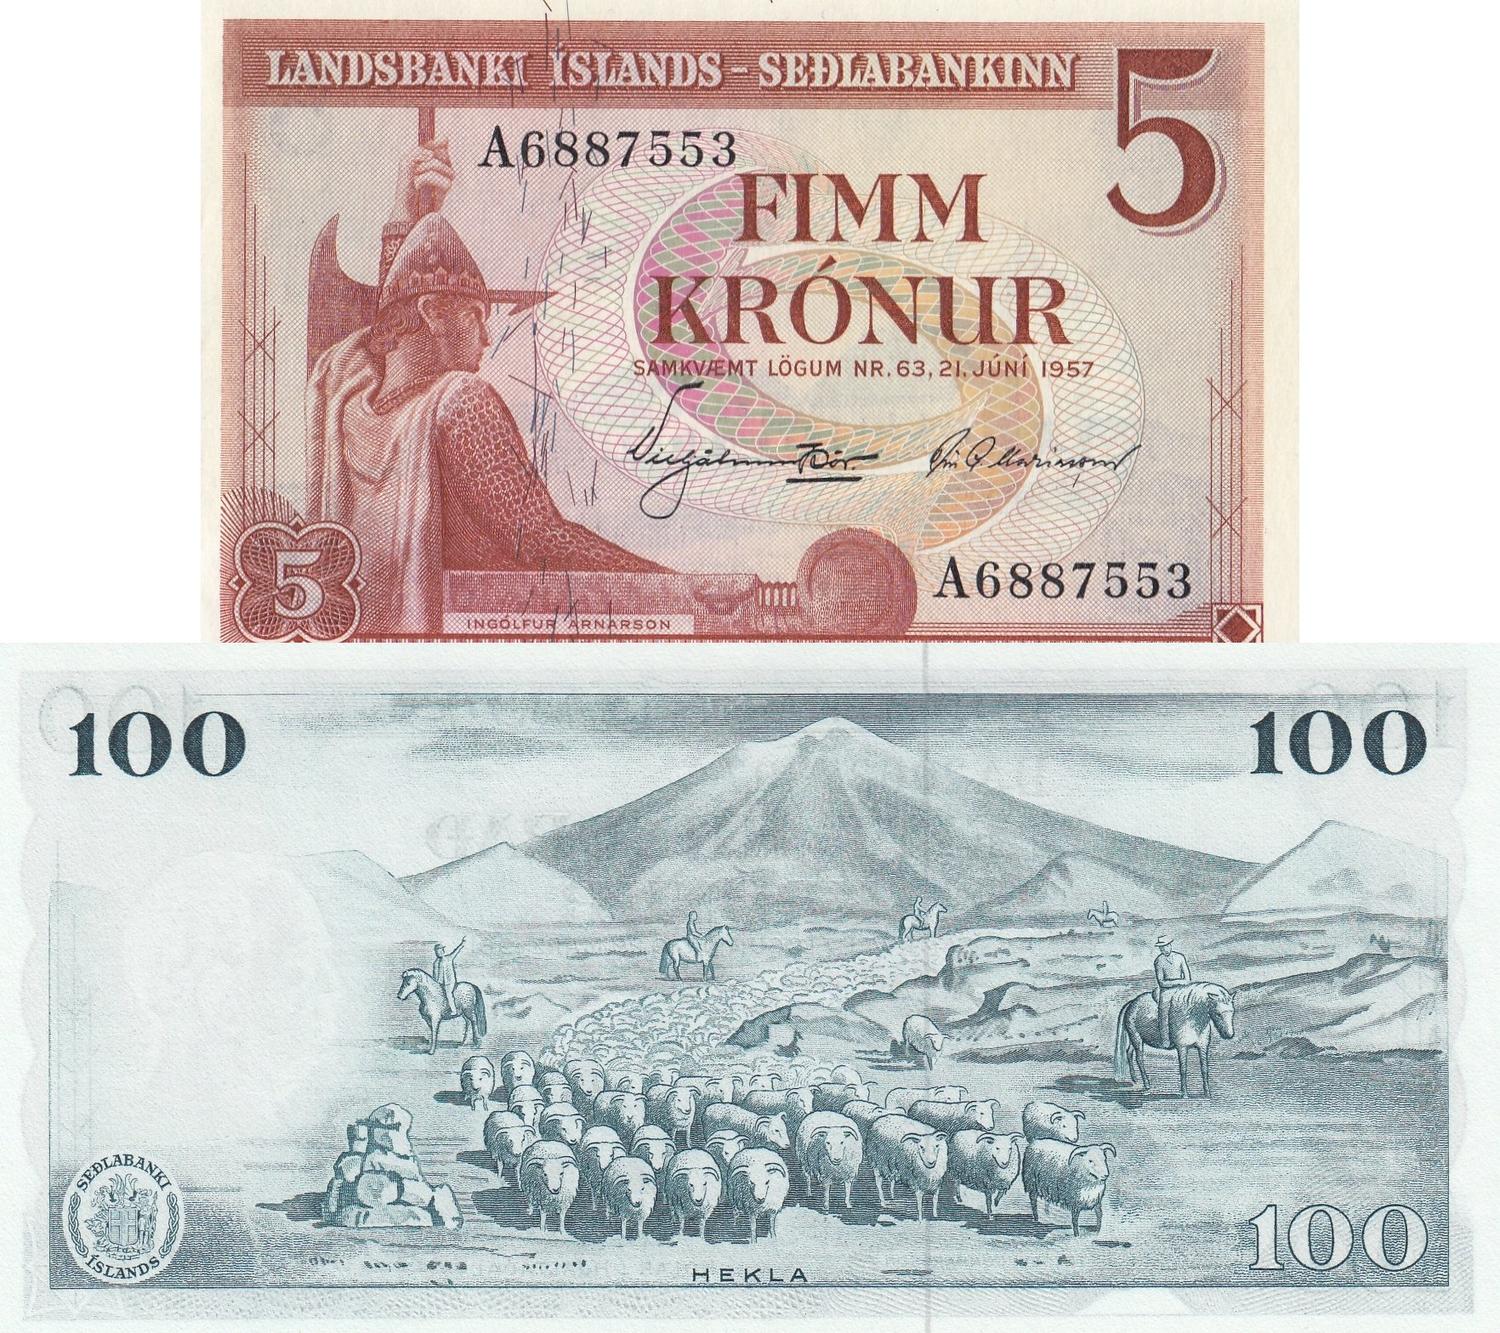 ICELAND 100 KRONUR 1957 P 40 UNC